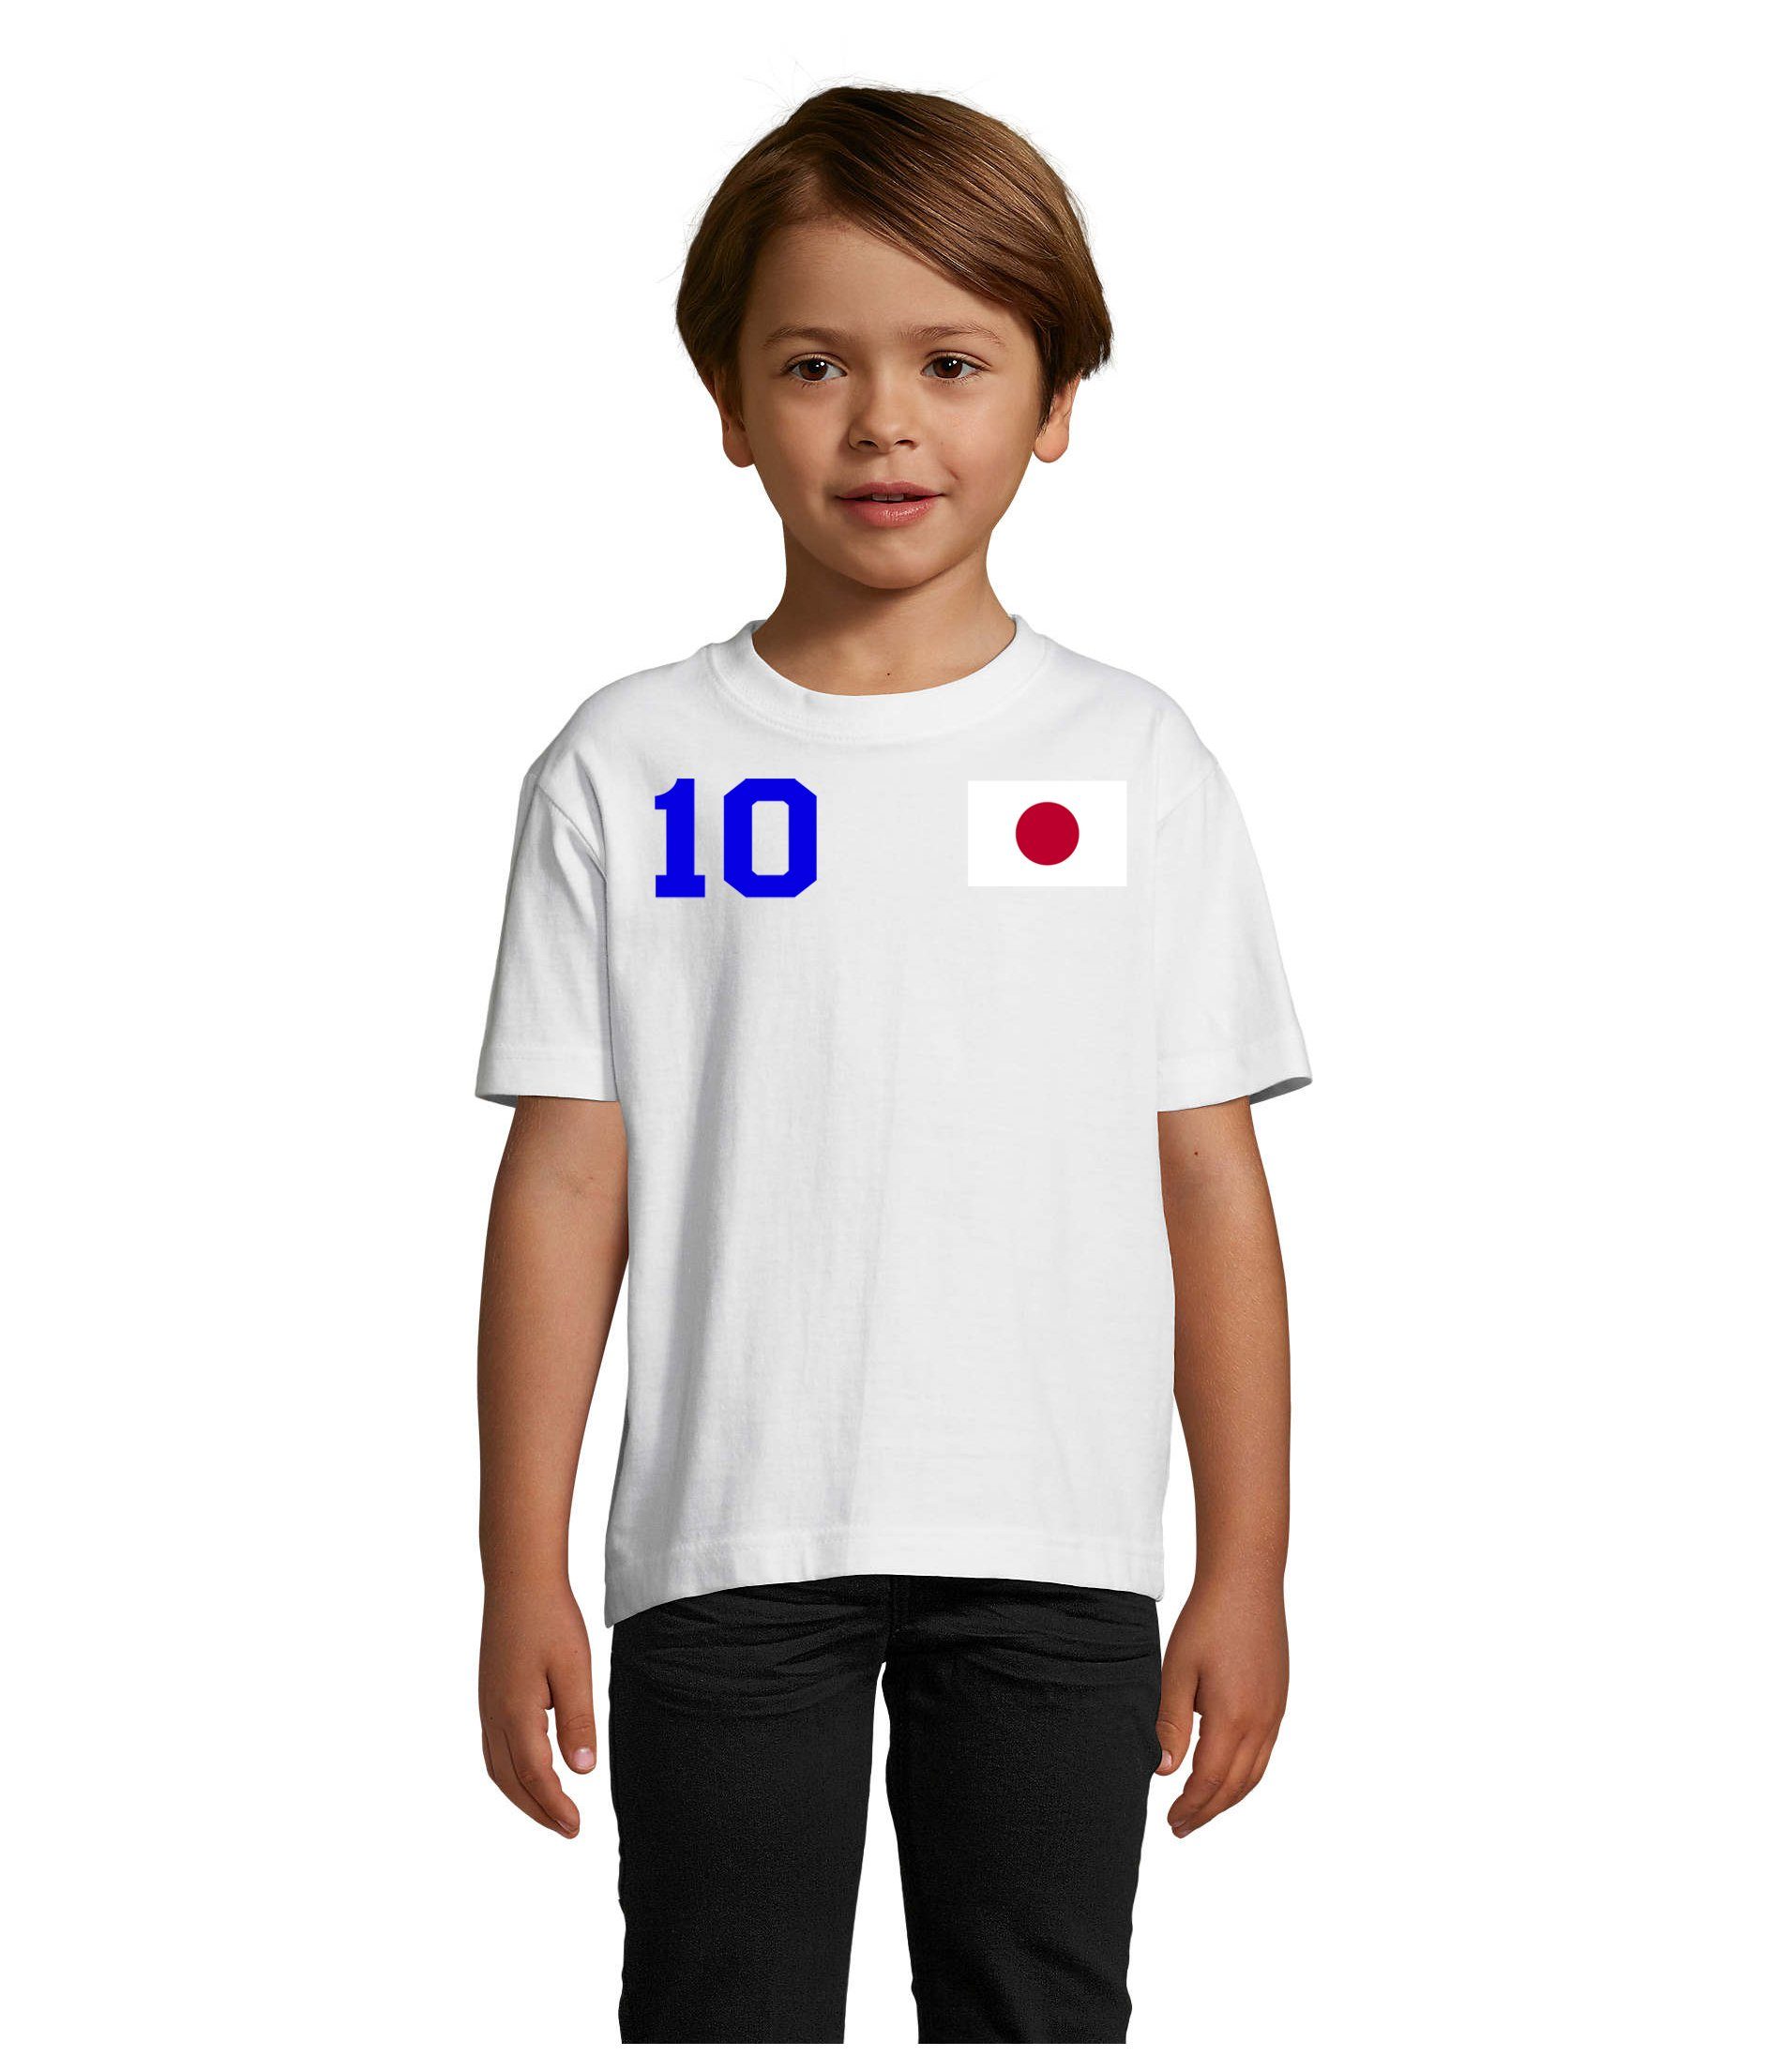 Blondie & Brownie T-Shirt Kinder Japan Asien Sport Trikot Fußball Handball Meister WM Blau/Weiss